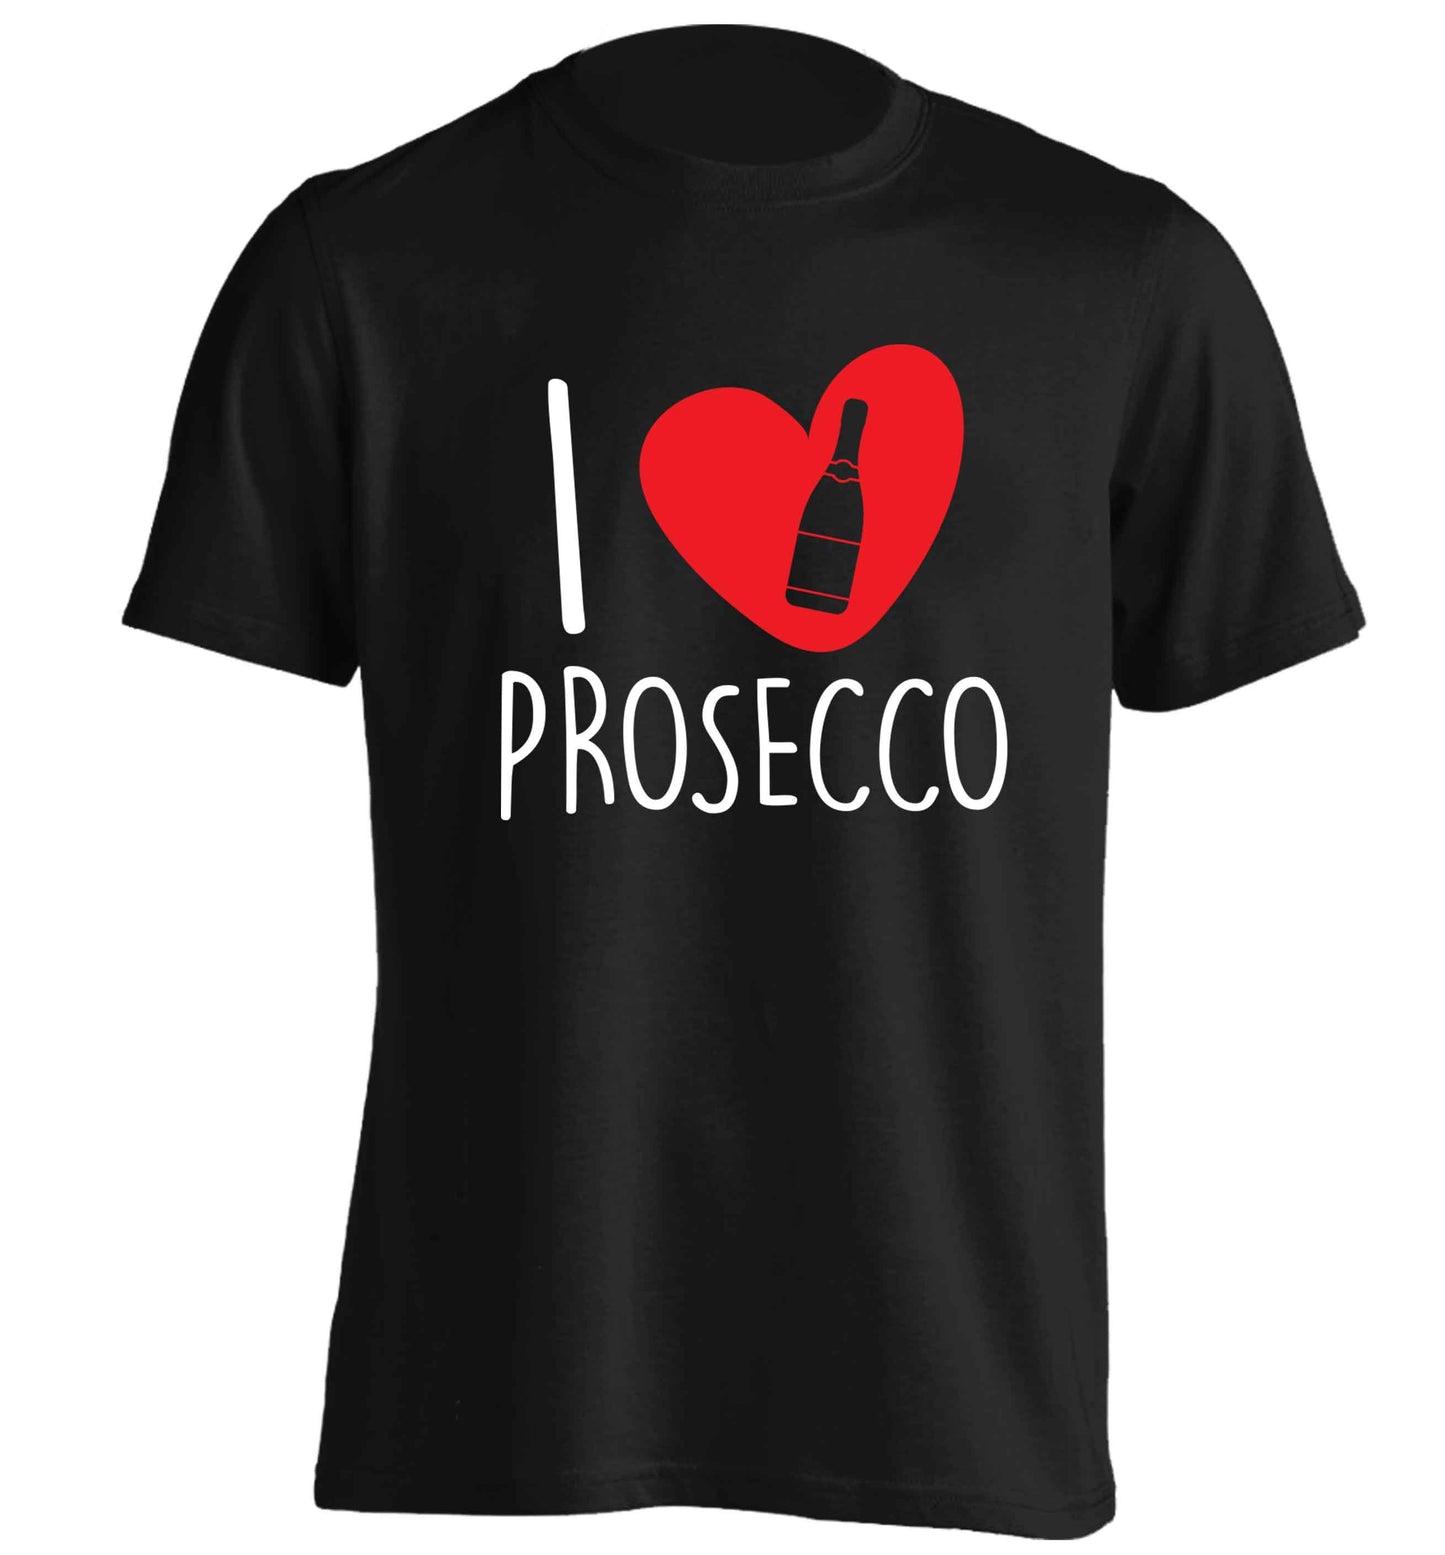 I love prosecco adults unisex black Tshirt 2XL